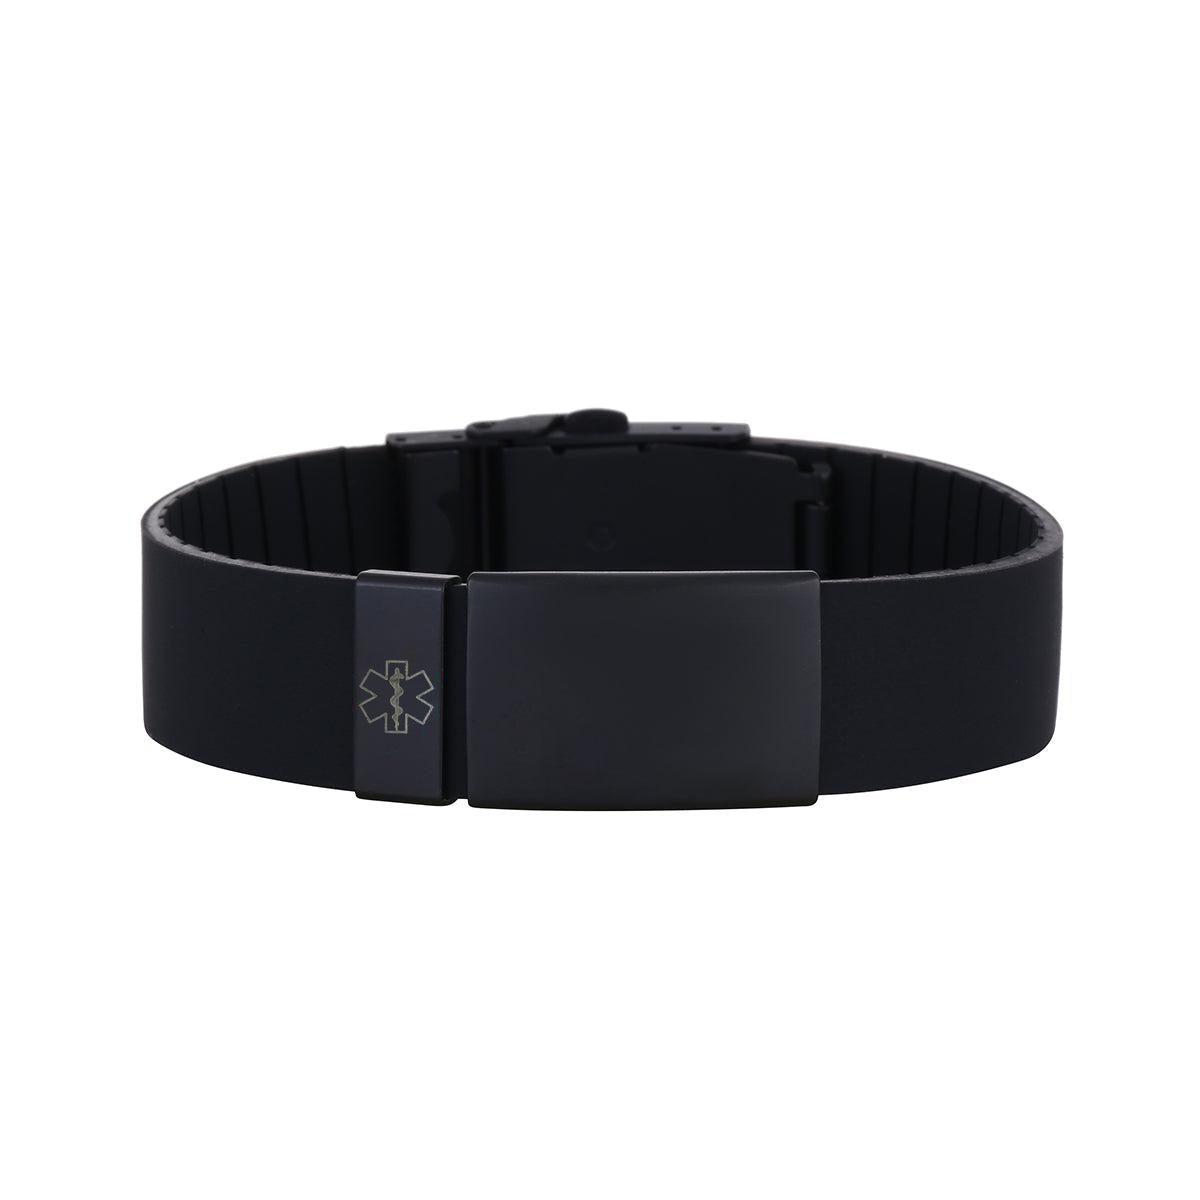 Kopo Black Adjustable Silicone Sports Medical ID Bracelet